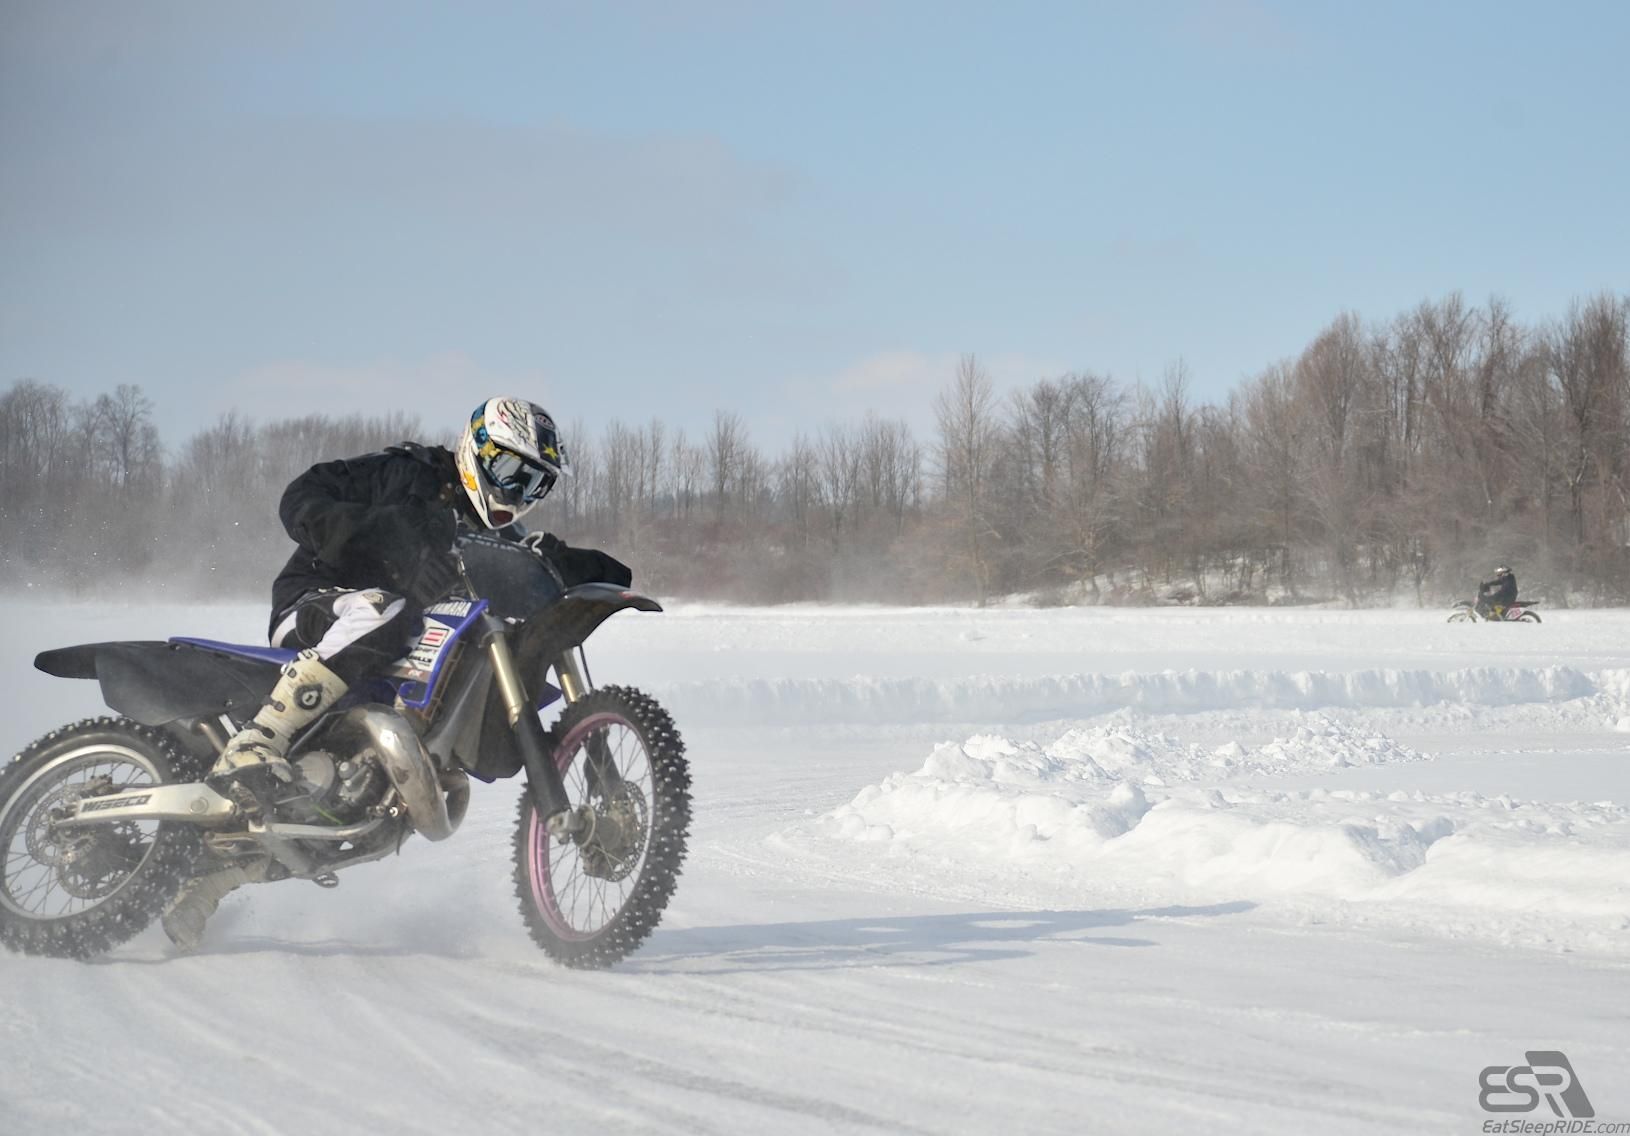 Skills sliding with control - Ice riding